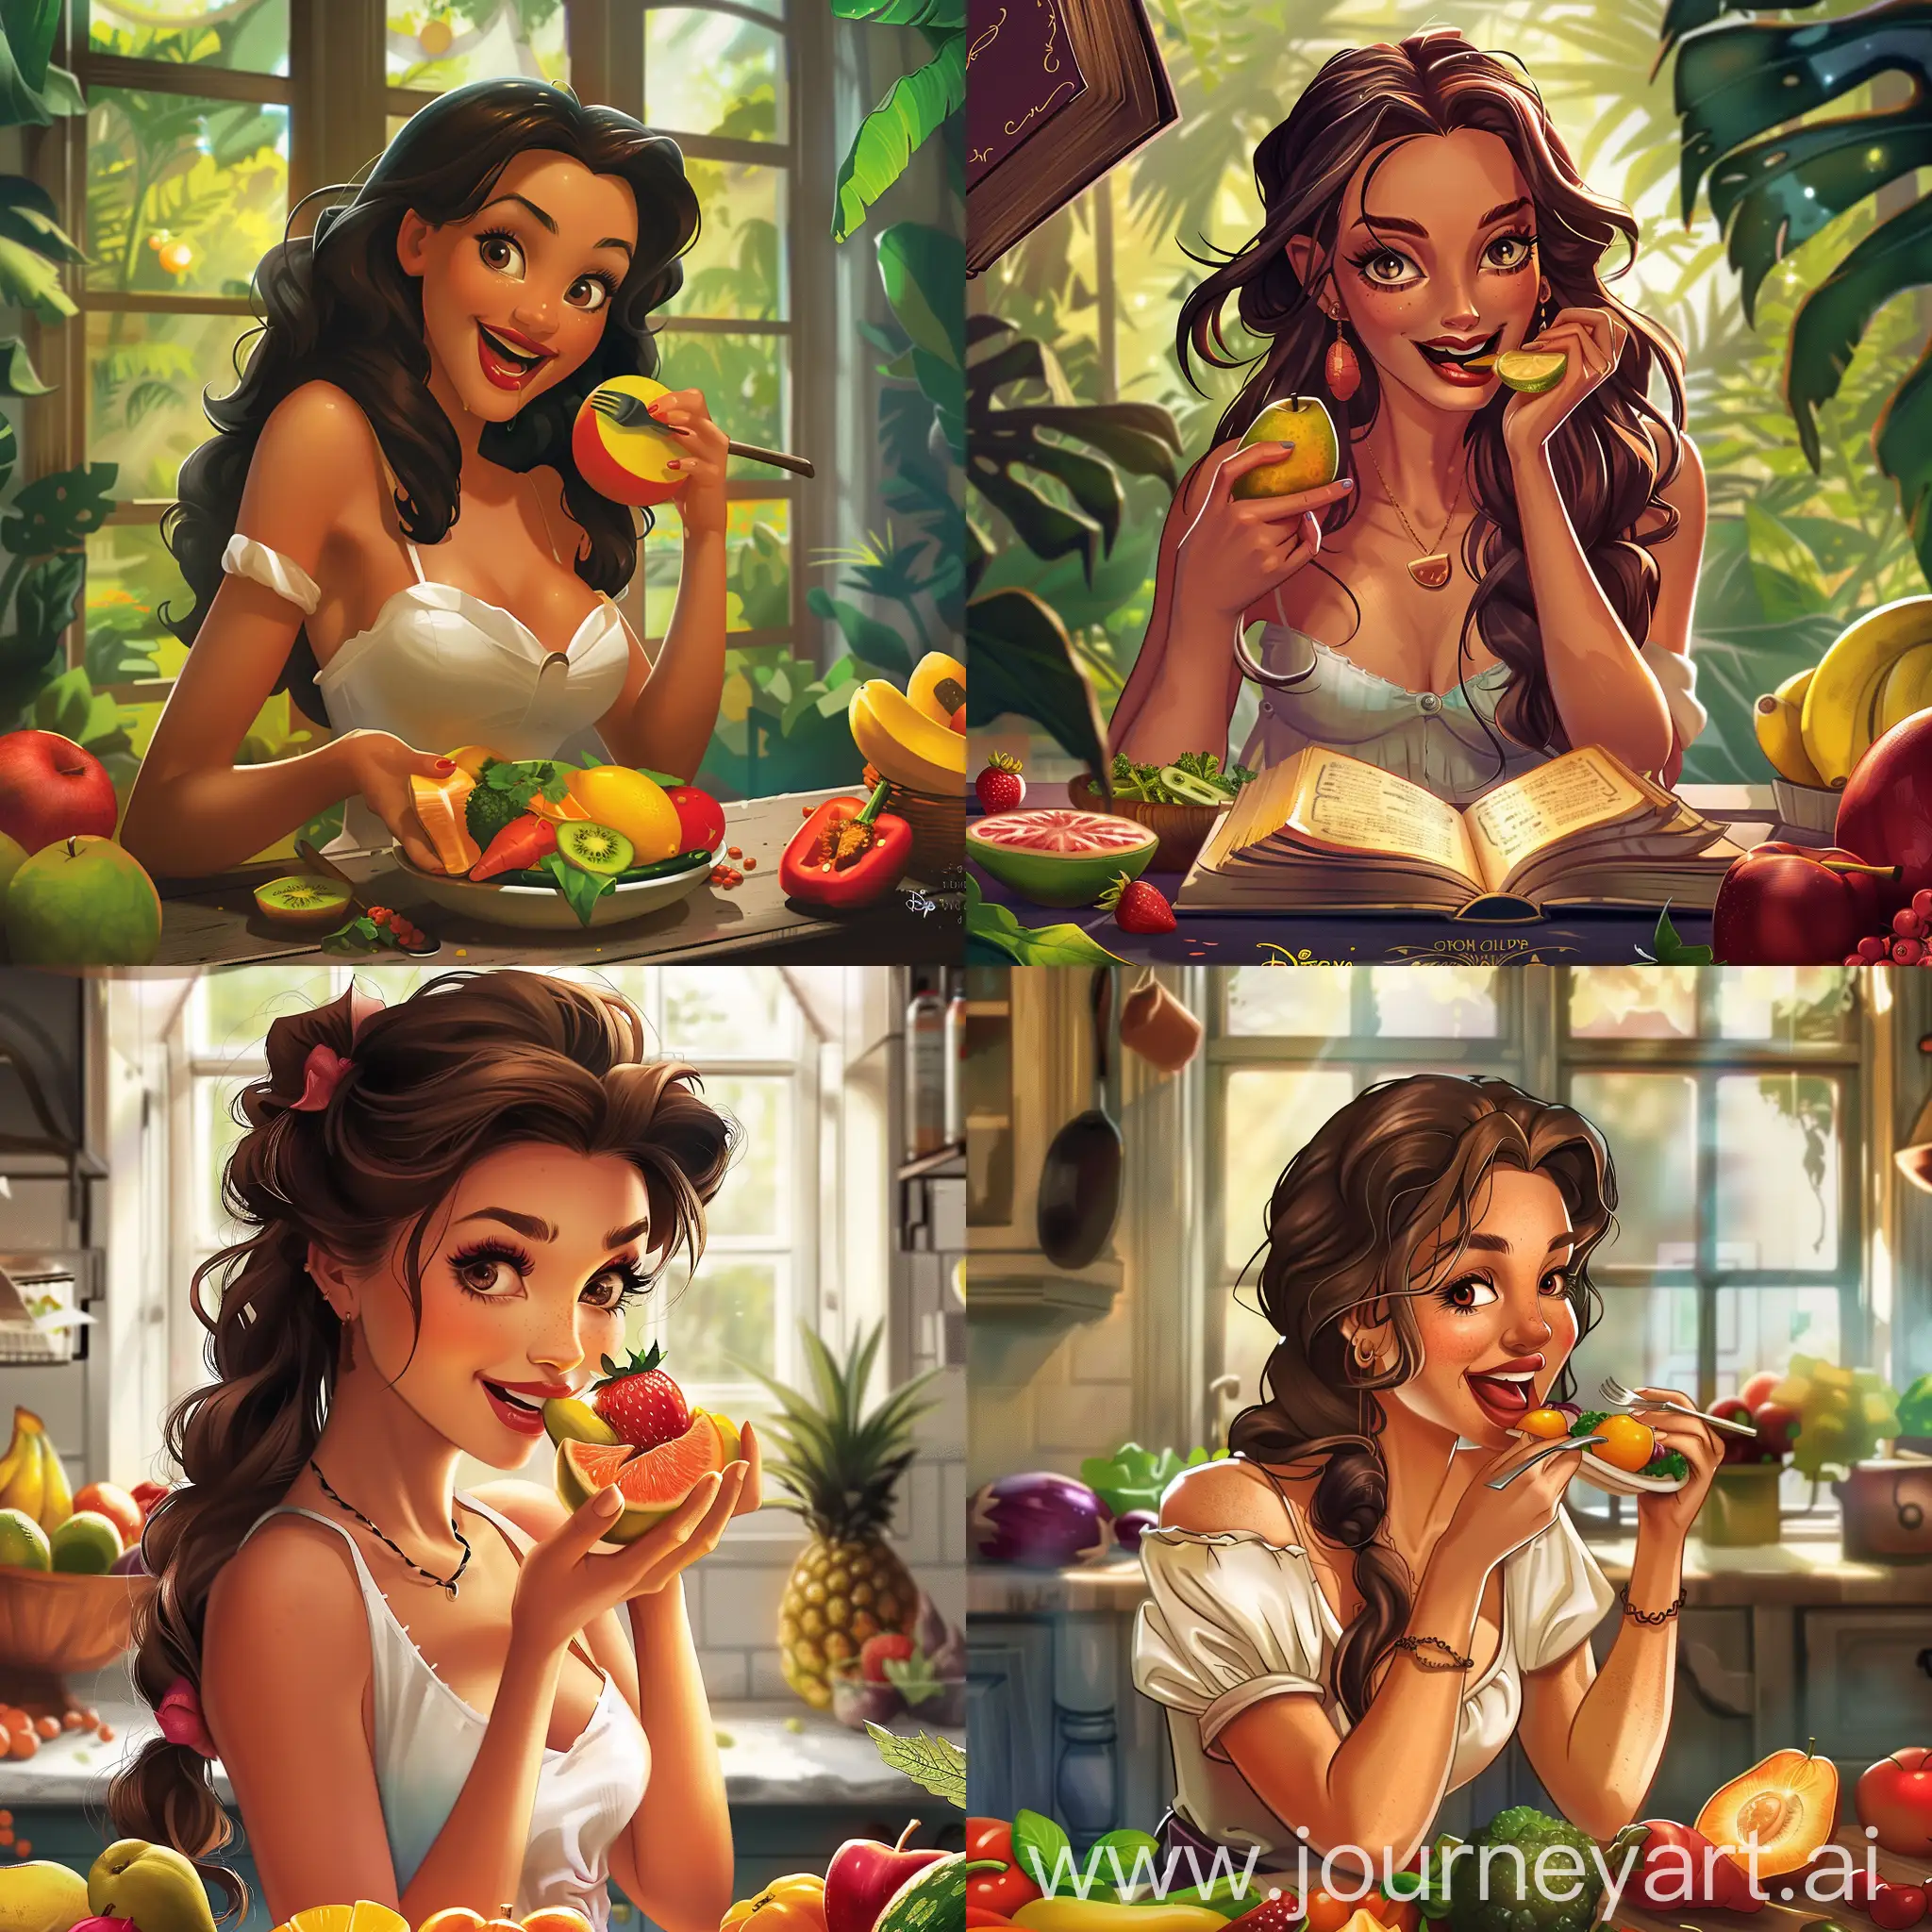 Healthy-Eating-Woman-Enjoying-Fruits-and-Veggies-in-Whimsical-Disney-Style-Cartoon